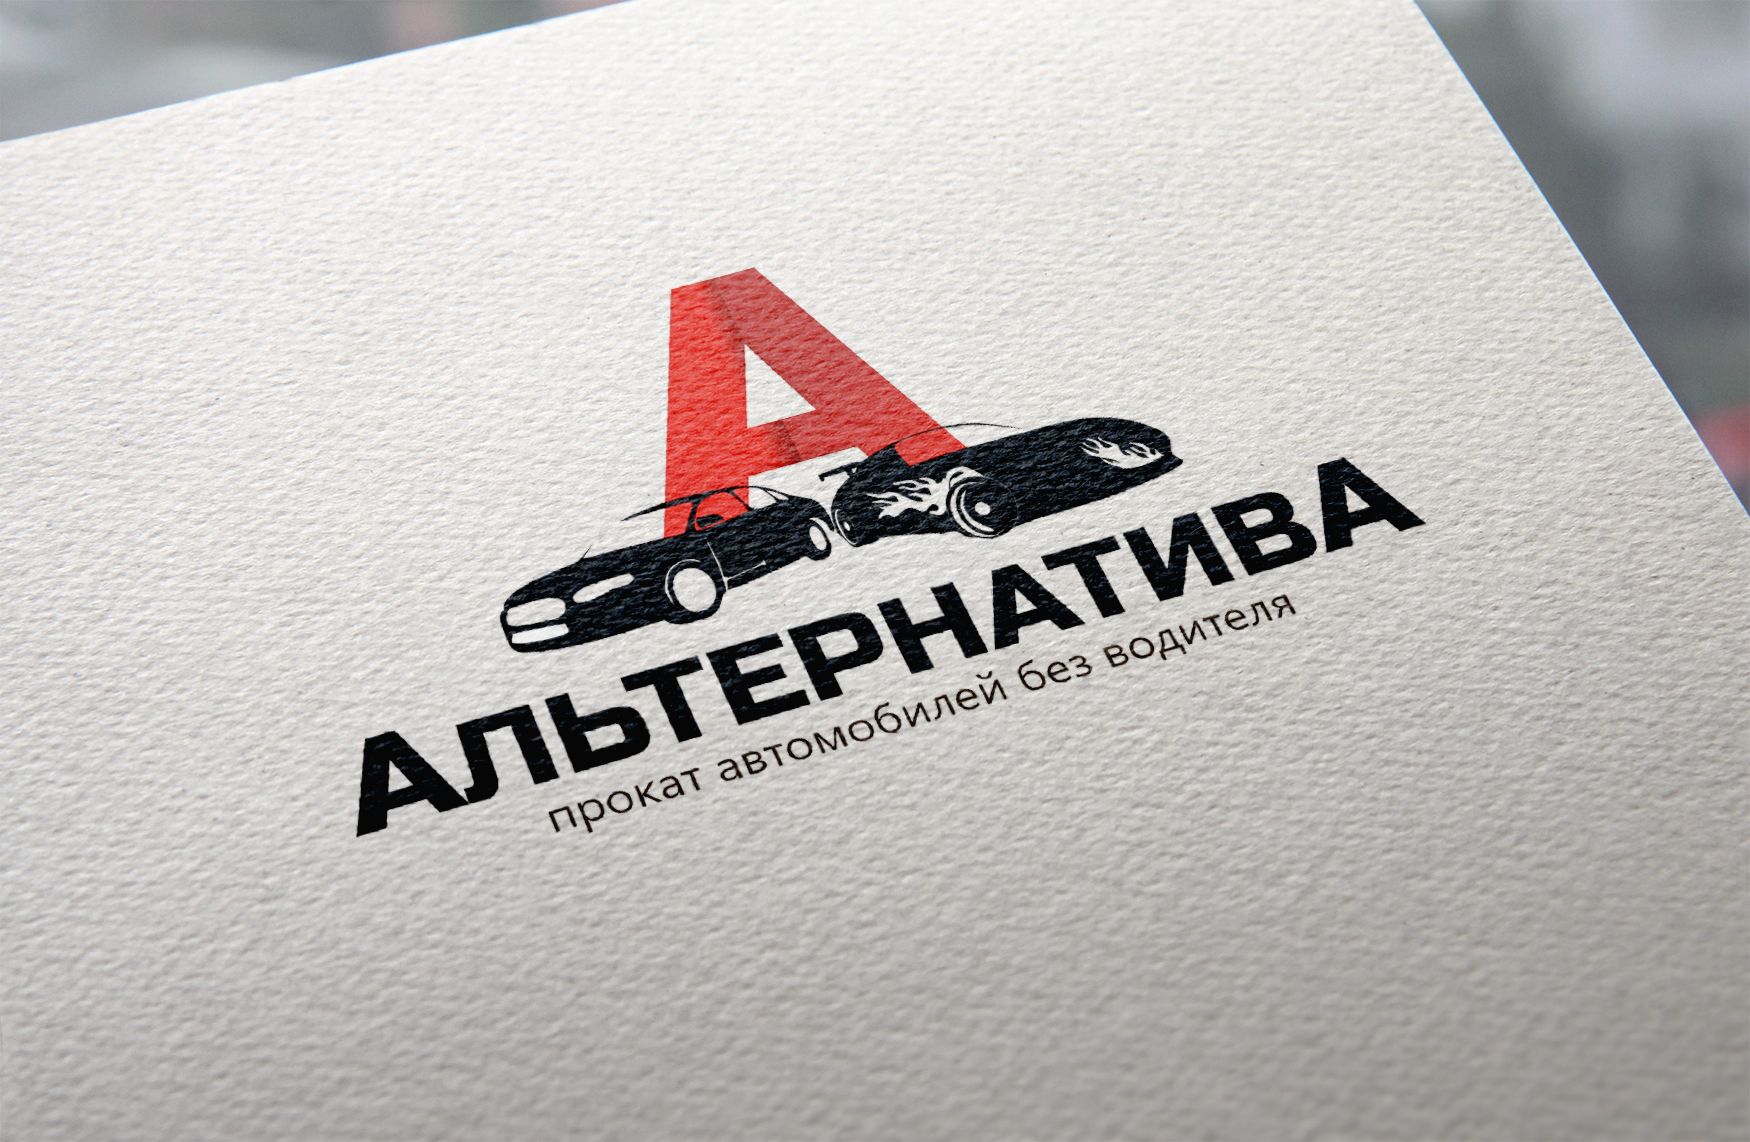 Логотип для проката автомобилей - дизайнер markosov